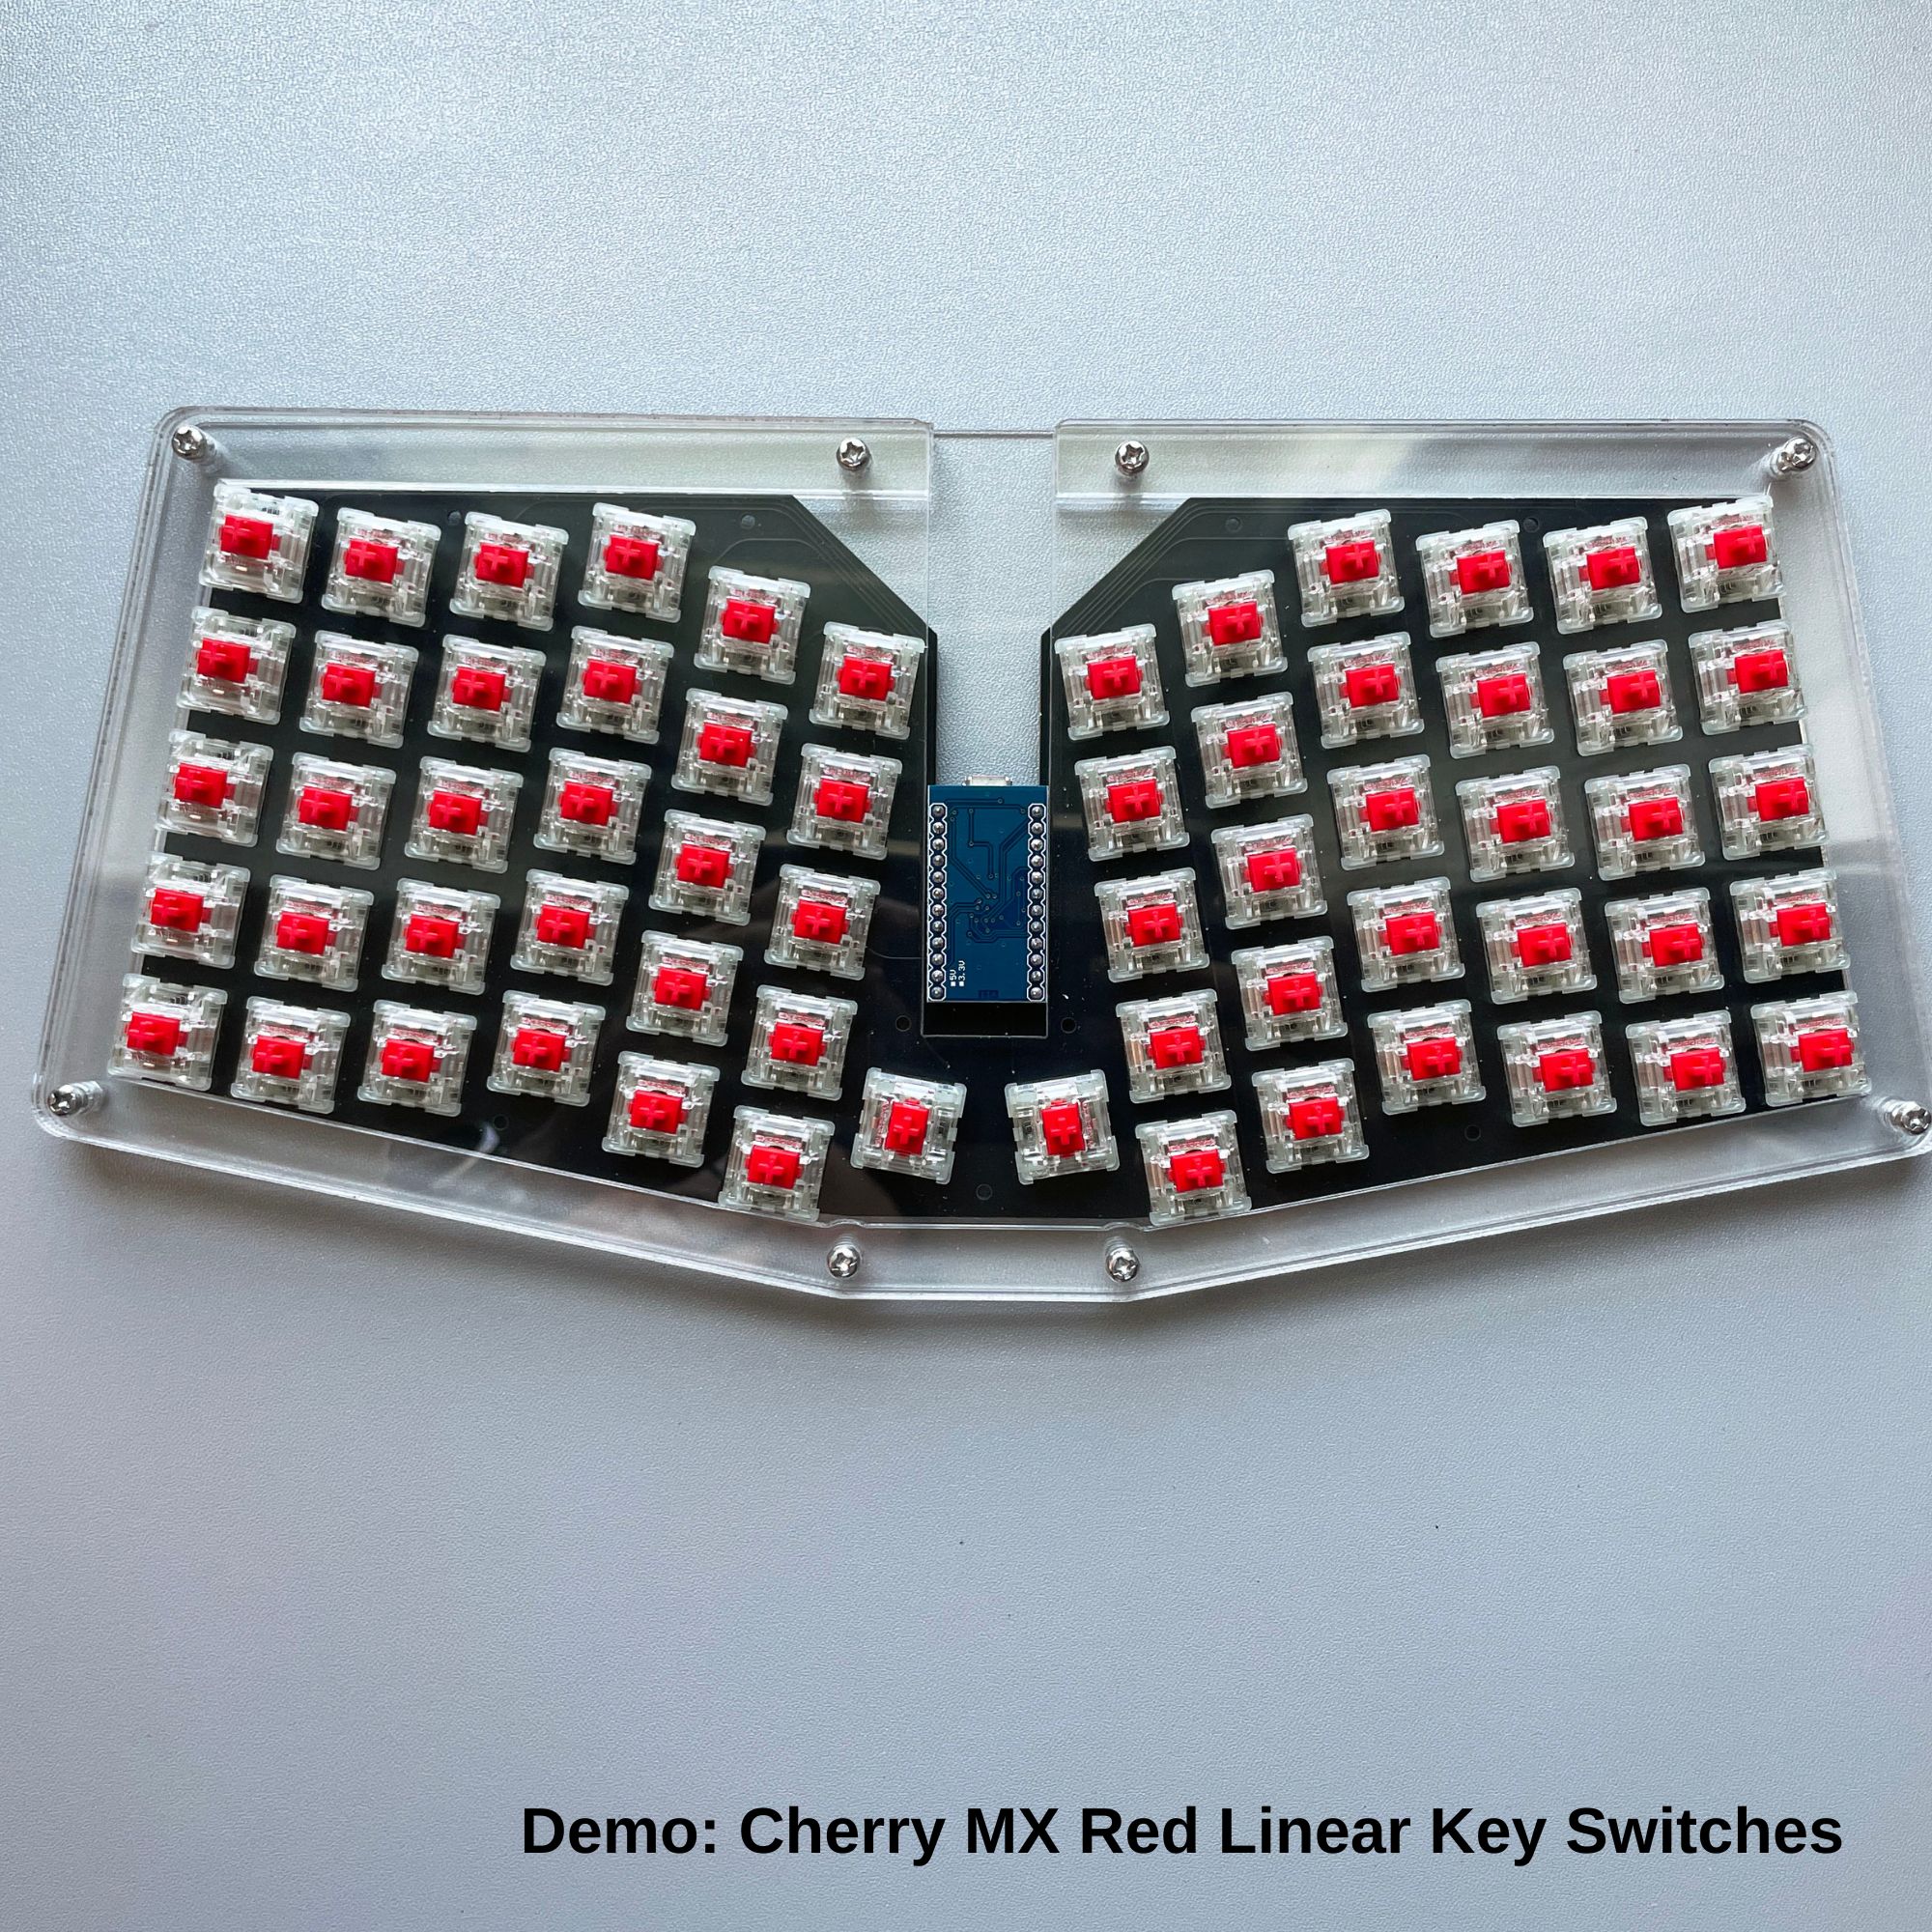 Pre-soldered Hotreus62 Hotswap MX / Choc v1 Low Profile 60% Keyboard